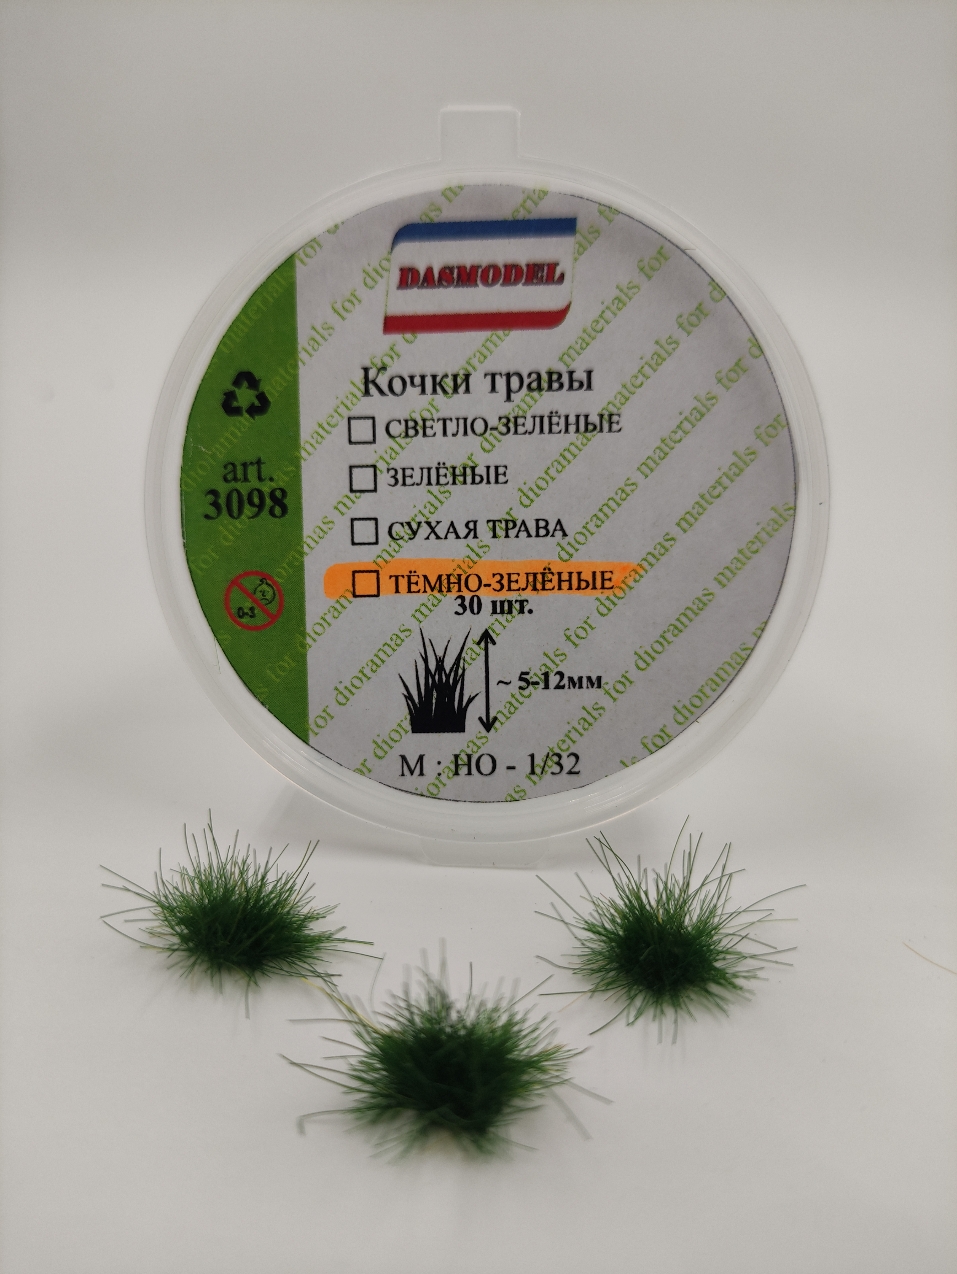 3098  материалы для диорам  Кочки травы  темно-зеленые 5-12 мм/30 шт.